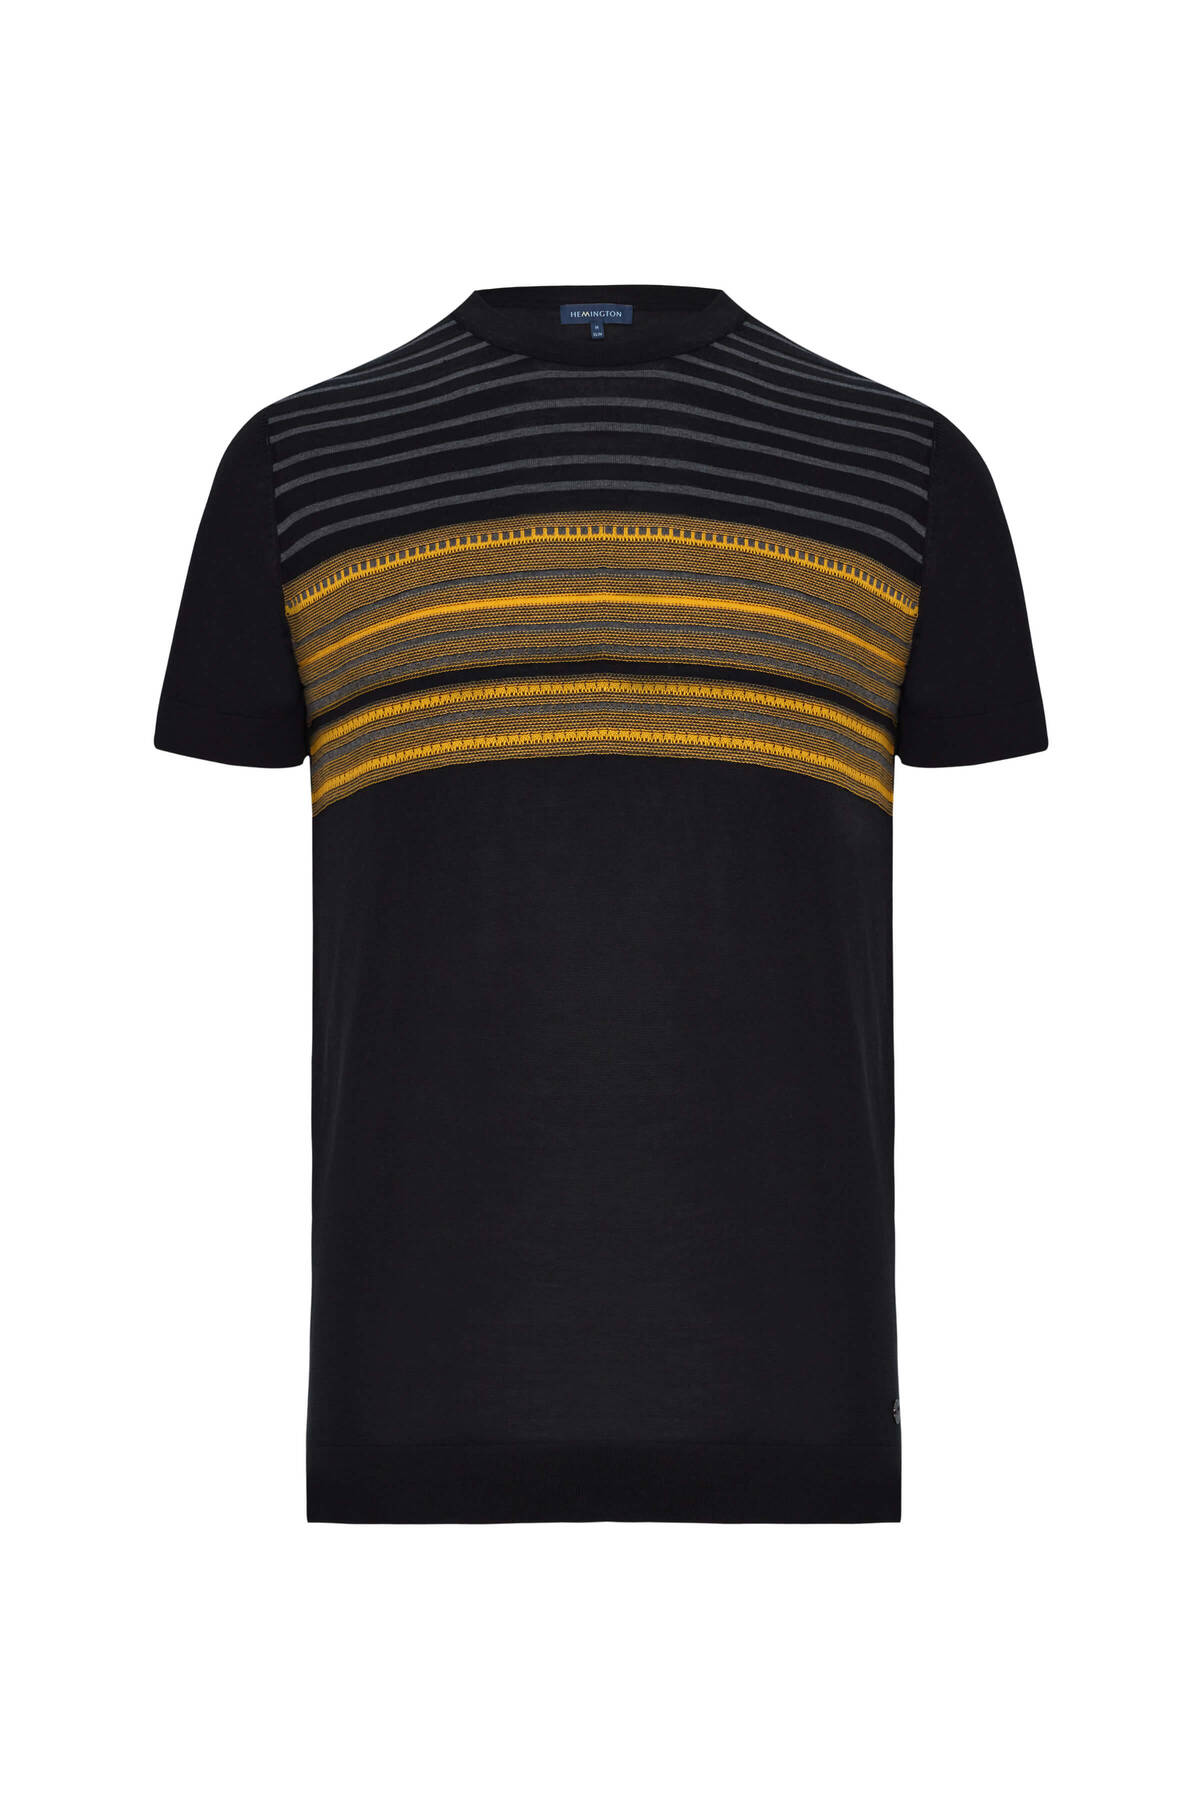 İpek Pamuk Karışım Çizgi Desenli Siyah Triko T-Shirt